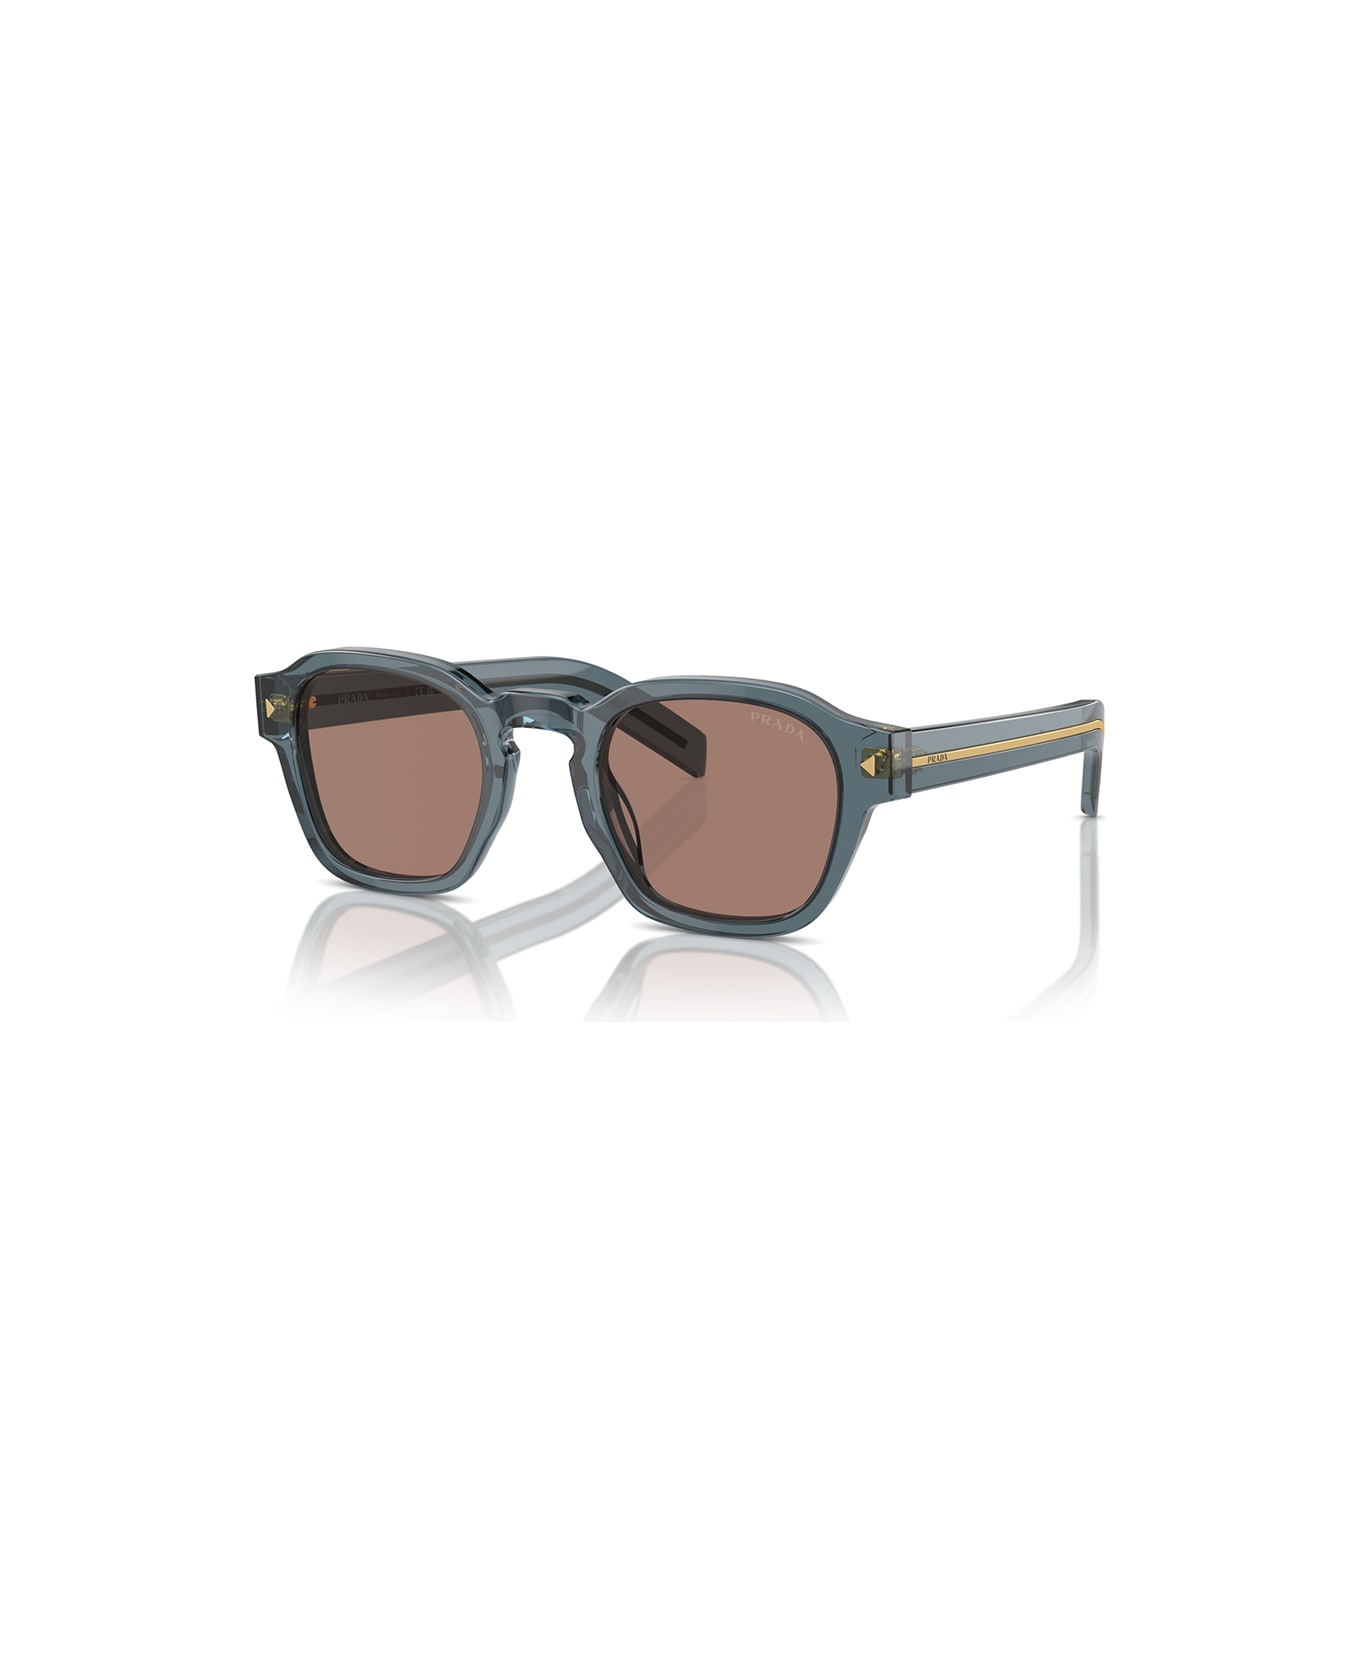 Prada Eyewear Sunglasses - Blu/Marrone